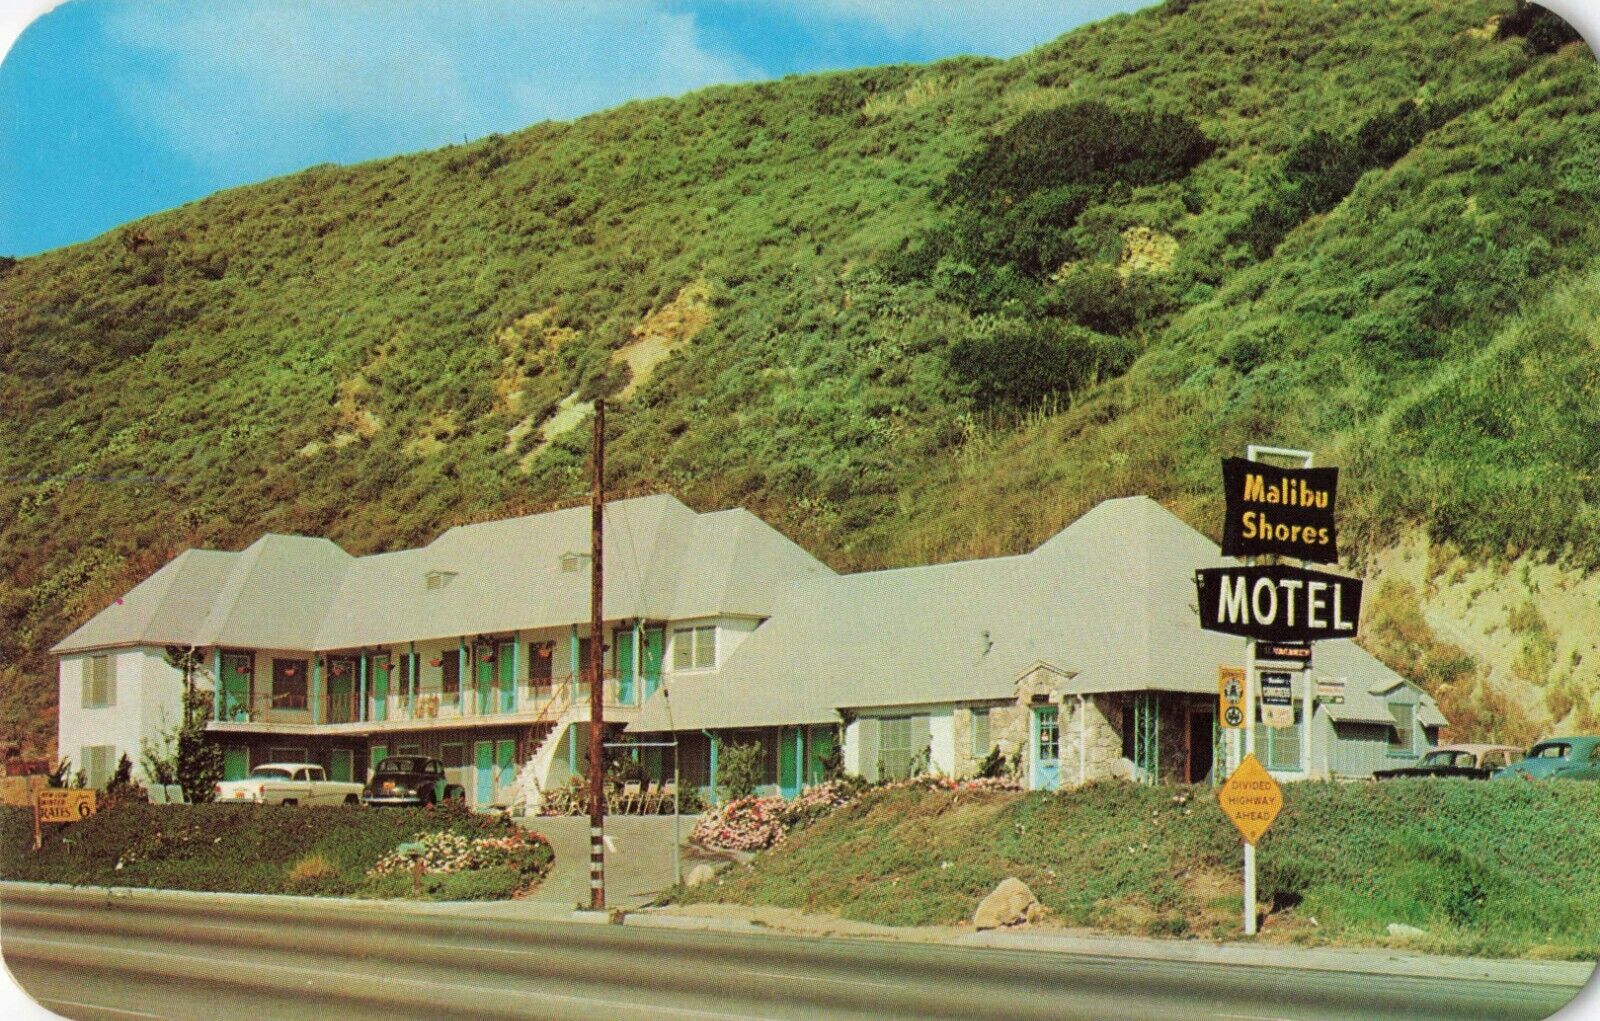 Malibu Shores Motel Pacific Coast Highway Malibu California c1950 Postcard